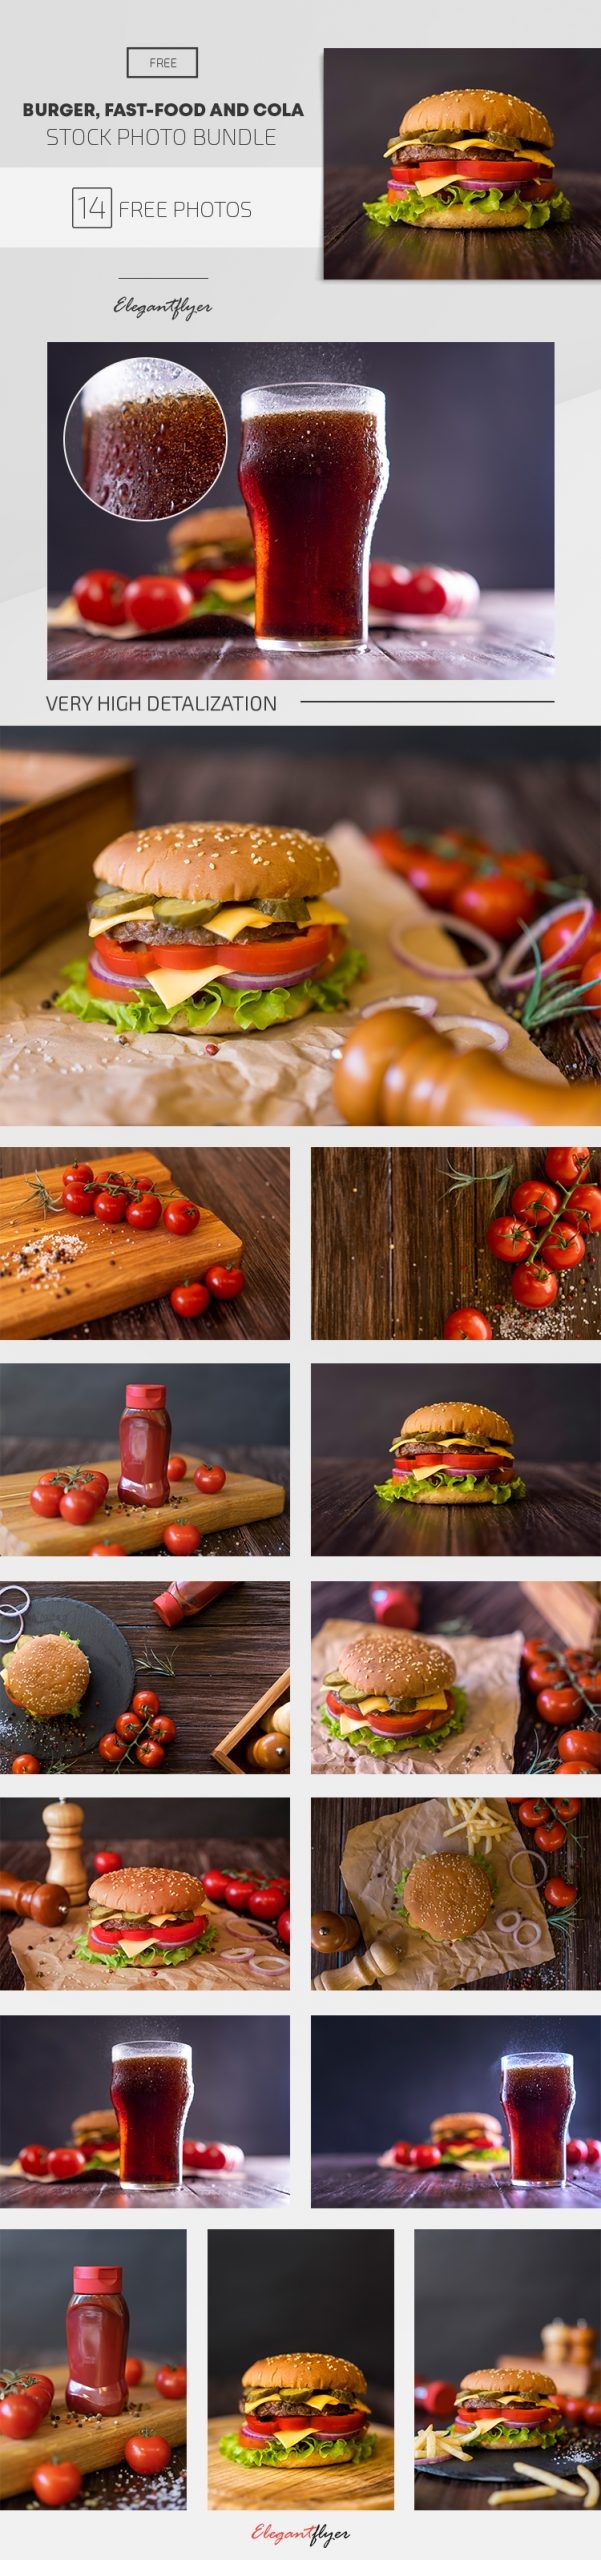 Burger, Fast-Food and Cola by ElegantFlyer